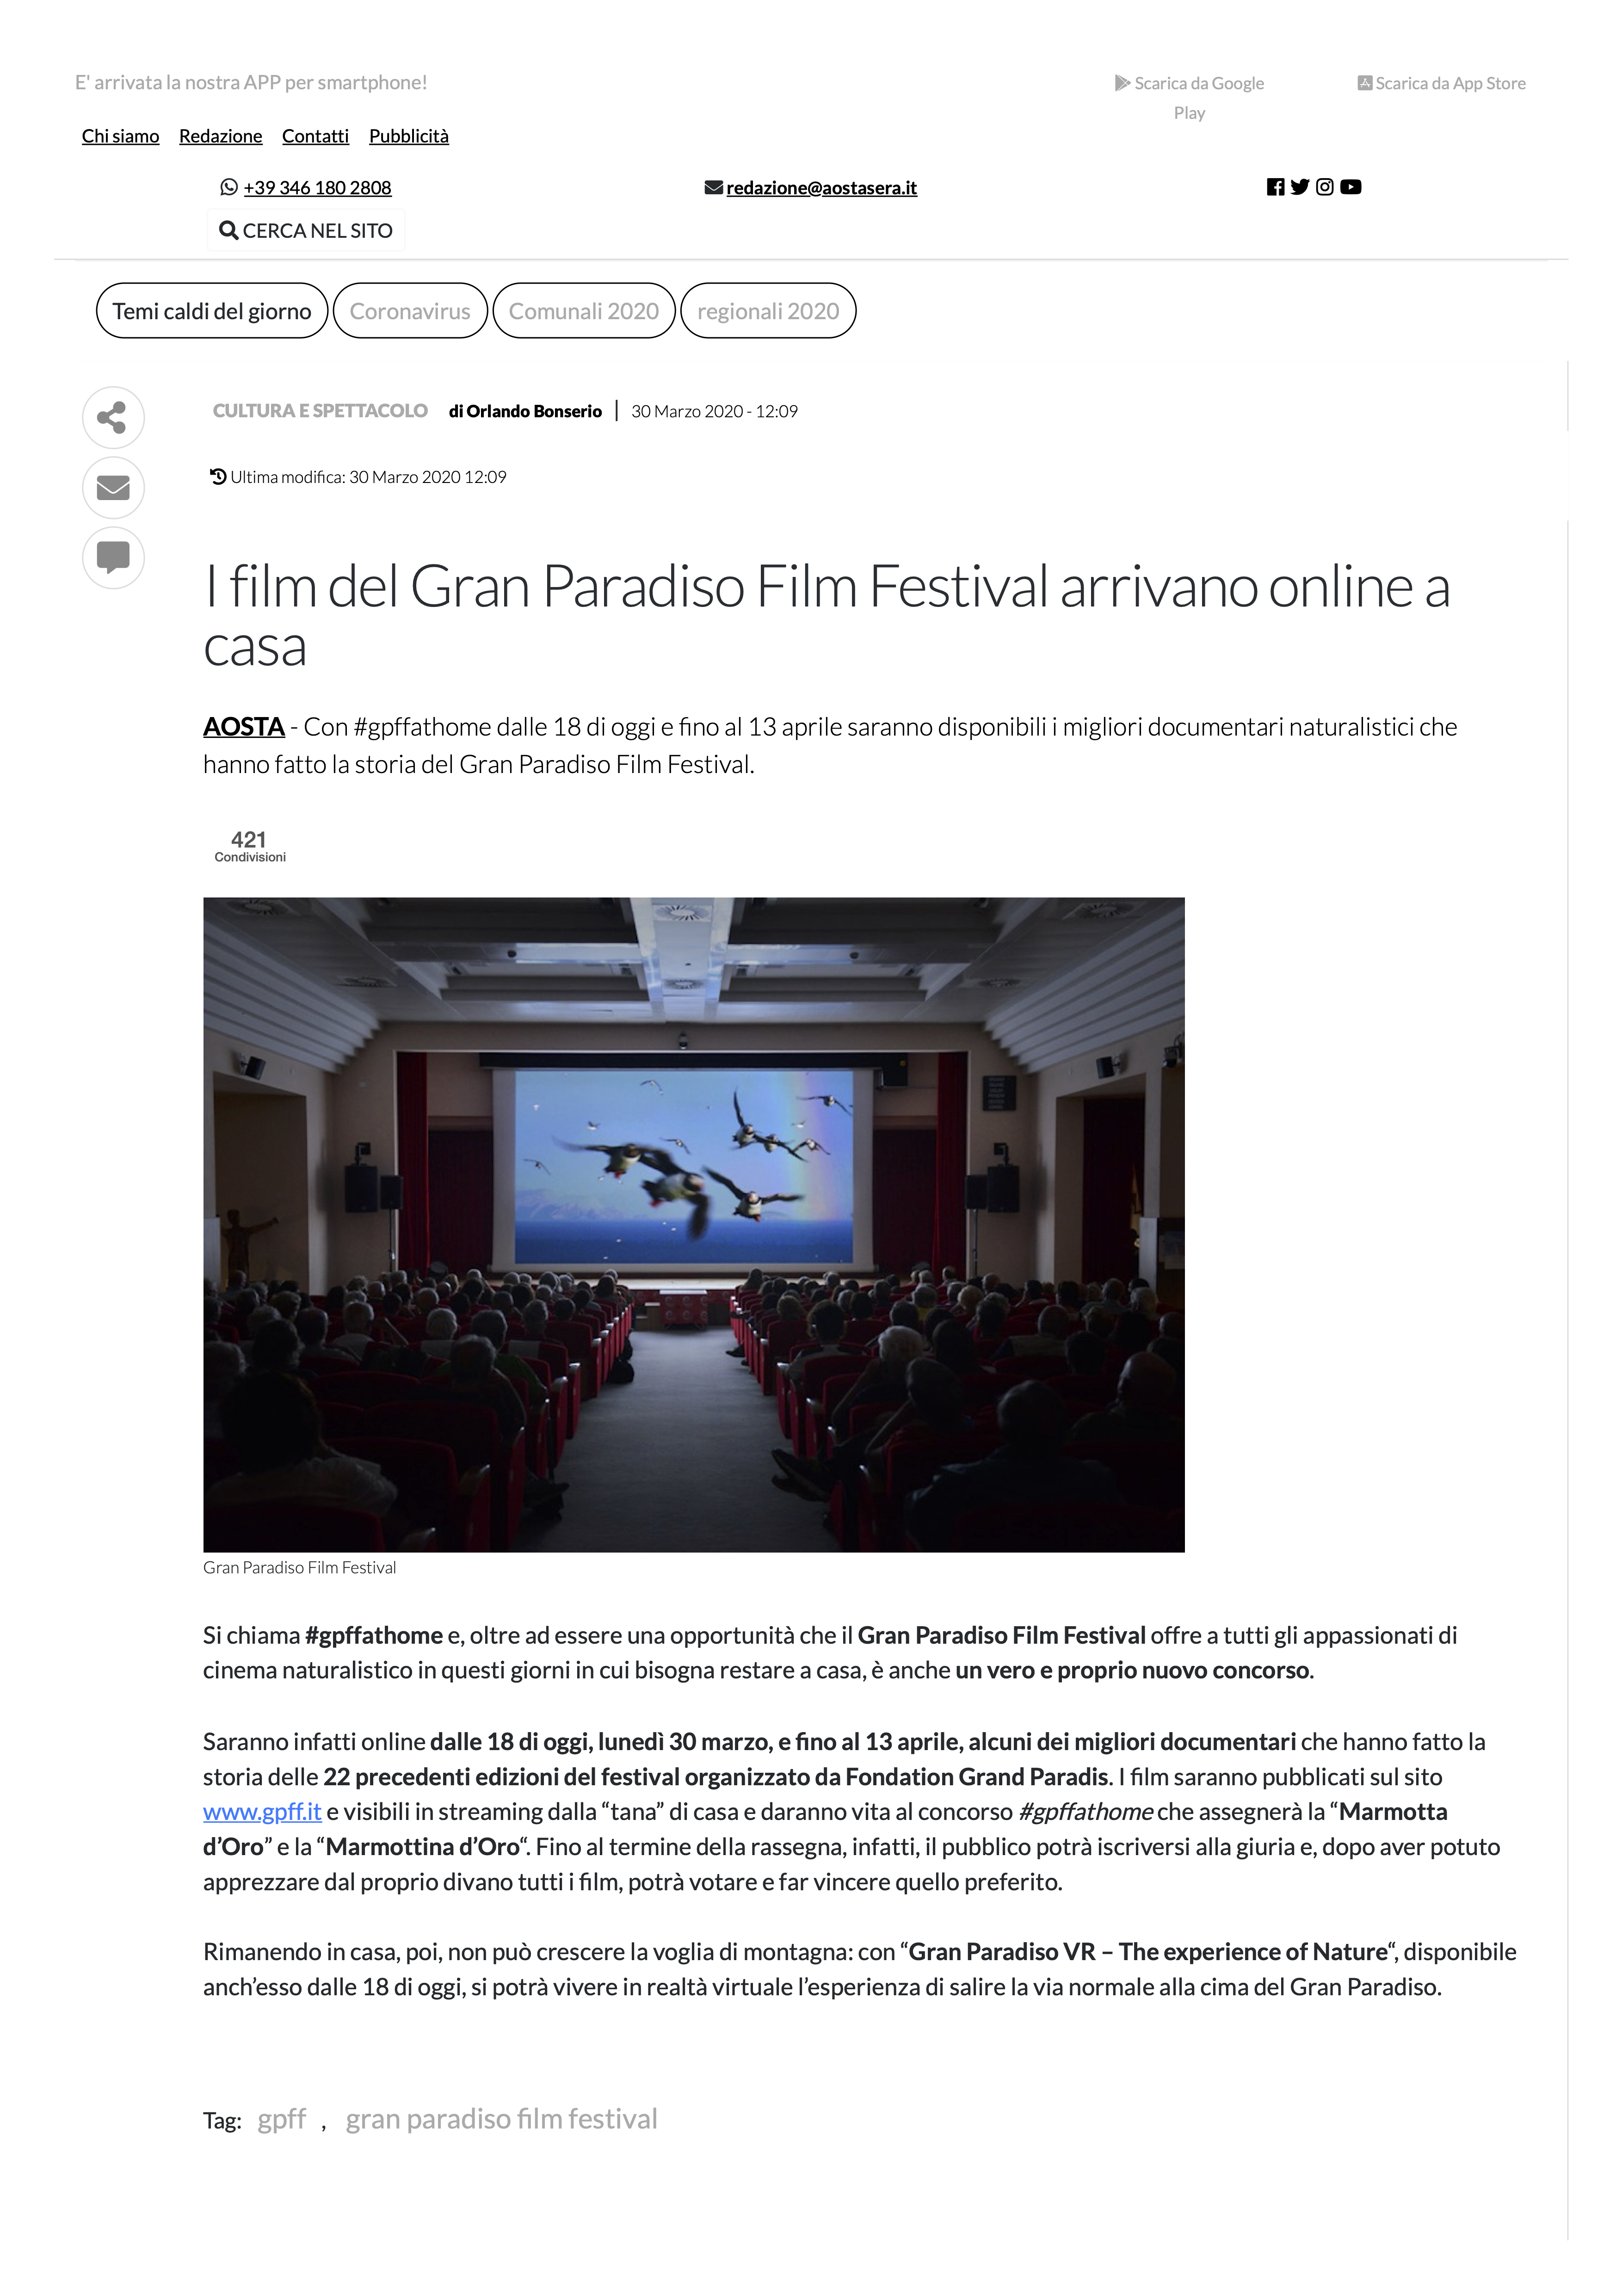 gpff gran paradiso film festival natura film festival gran paradiso documentari